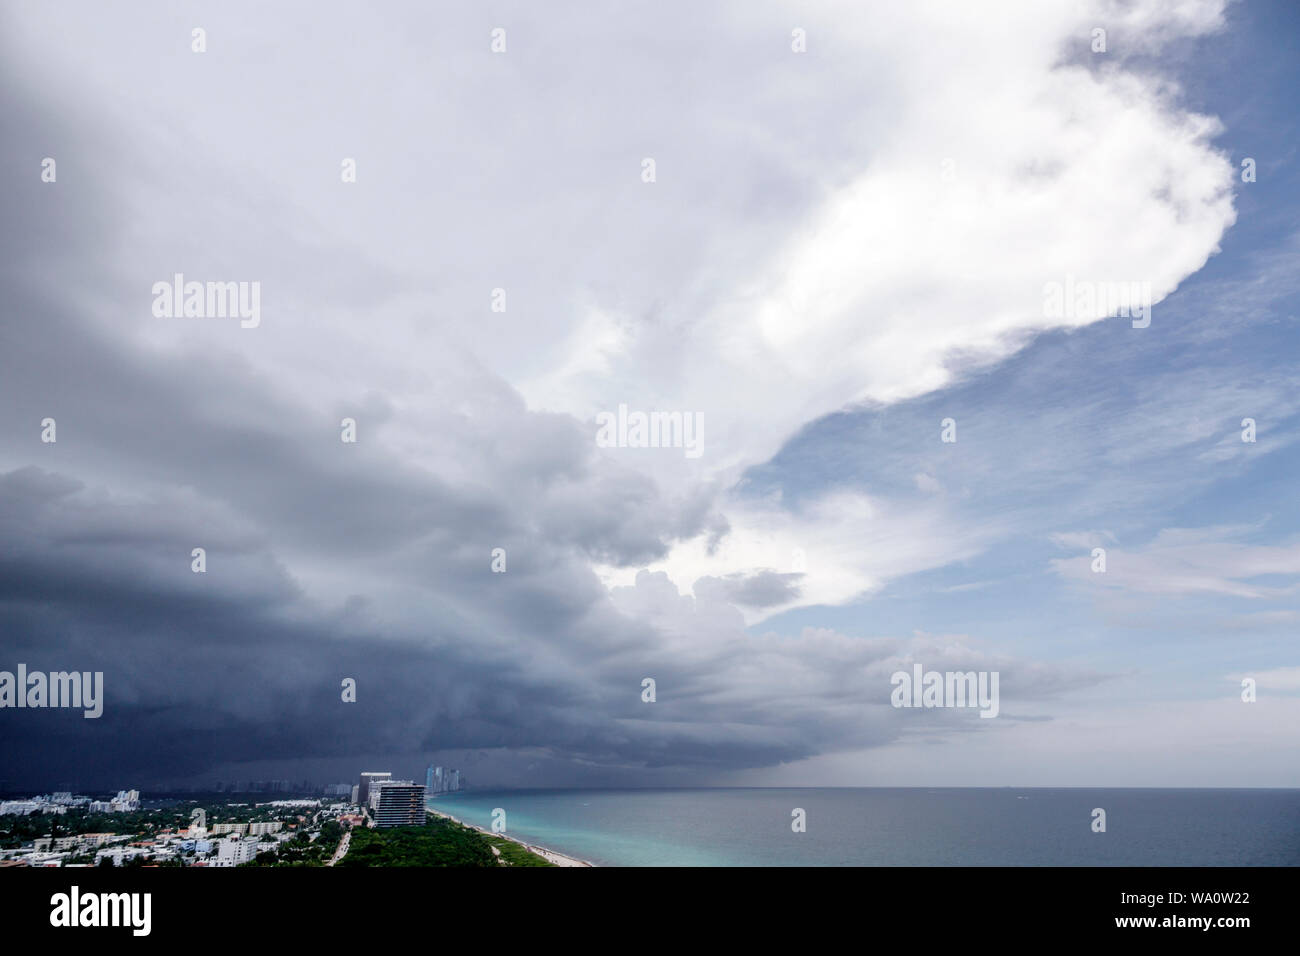 Miami Beach Florida,North Beach,weather sky clouds storm clouds storm rain stormfront,FL190731049 Stock Photo